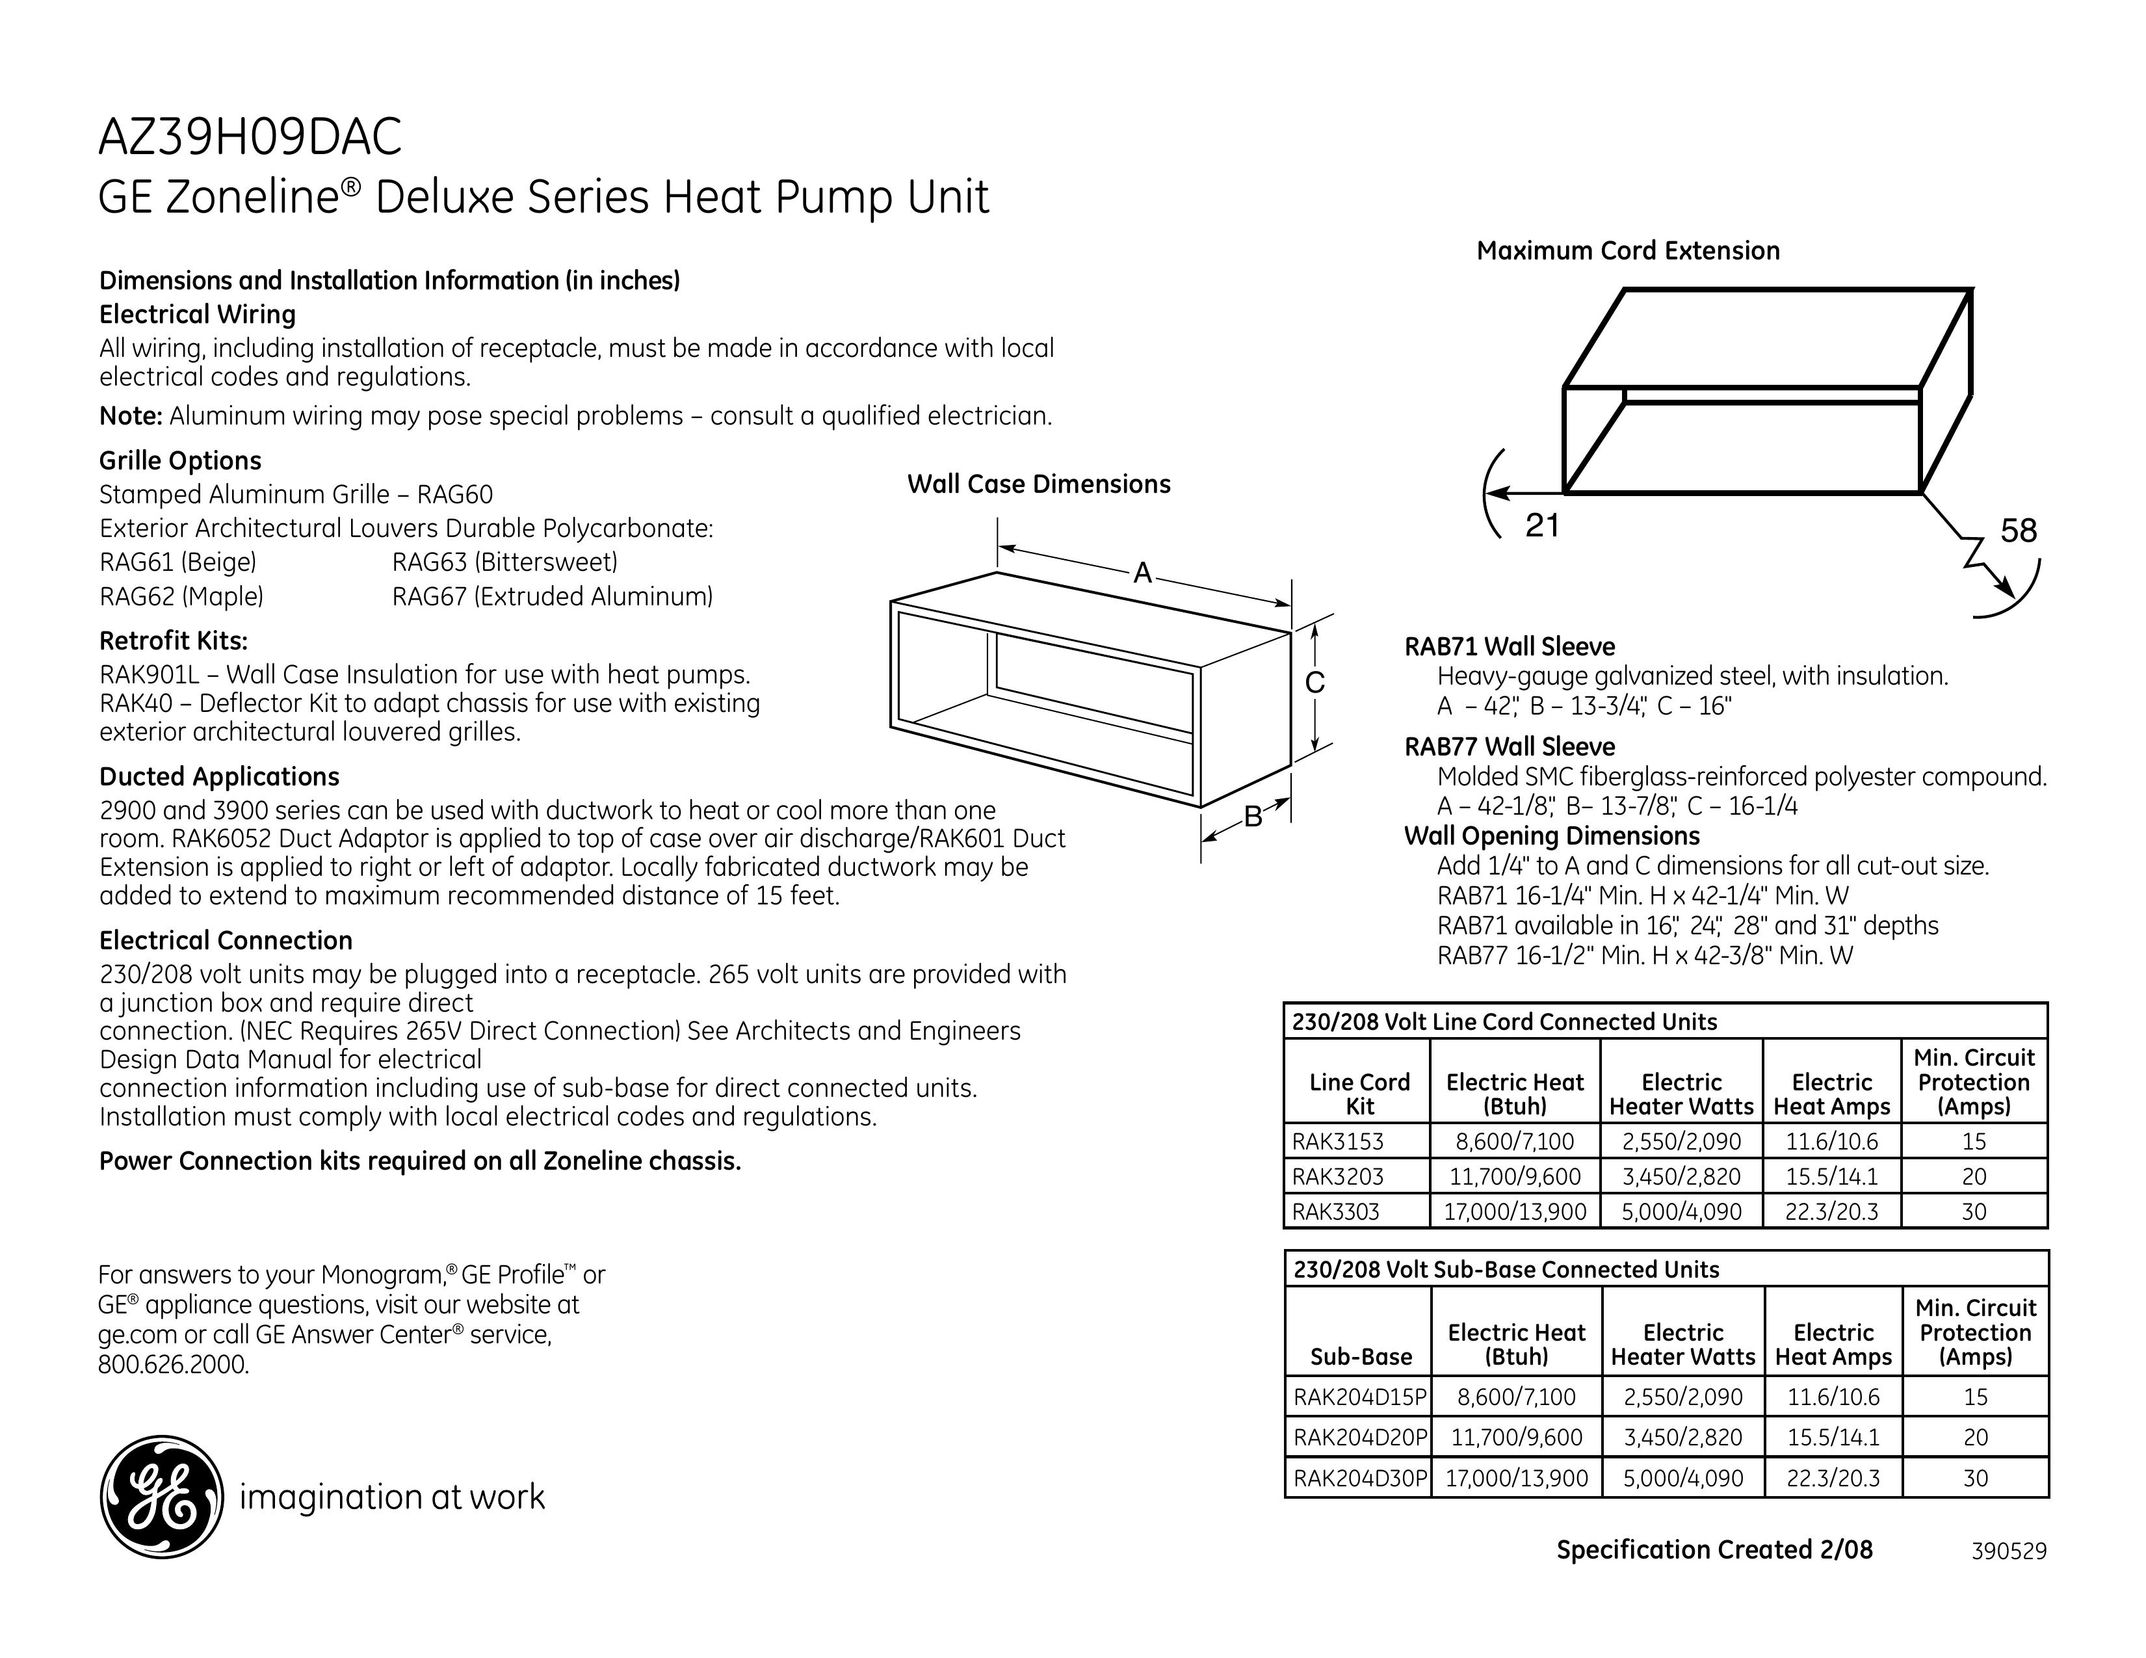 GE AZ39H09DAC Heat Pump User Manual